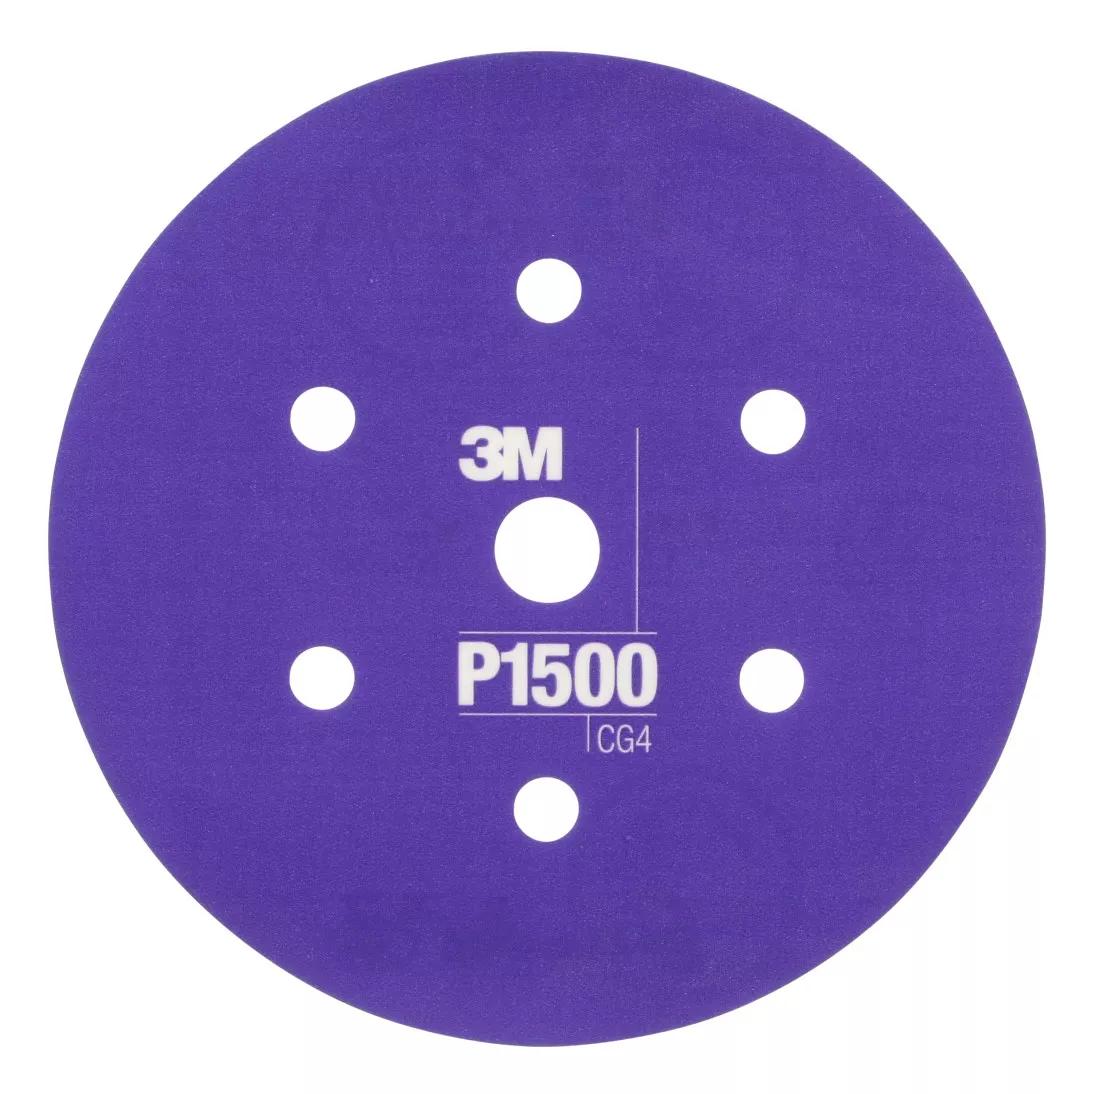 3M™ Hookit™ Flexible Abrasive Disc 270J, 34409, 6 in, Dust Free, P1500,
25 disc per carton, 5 cartons per case